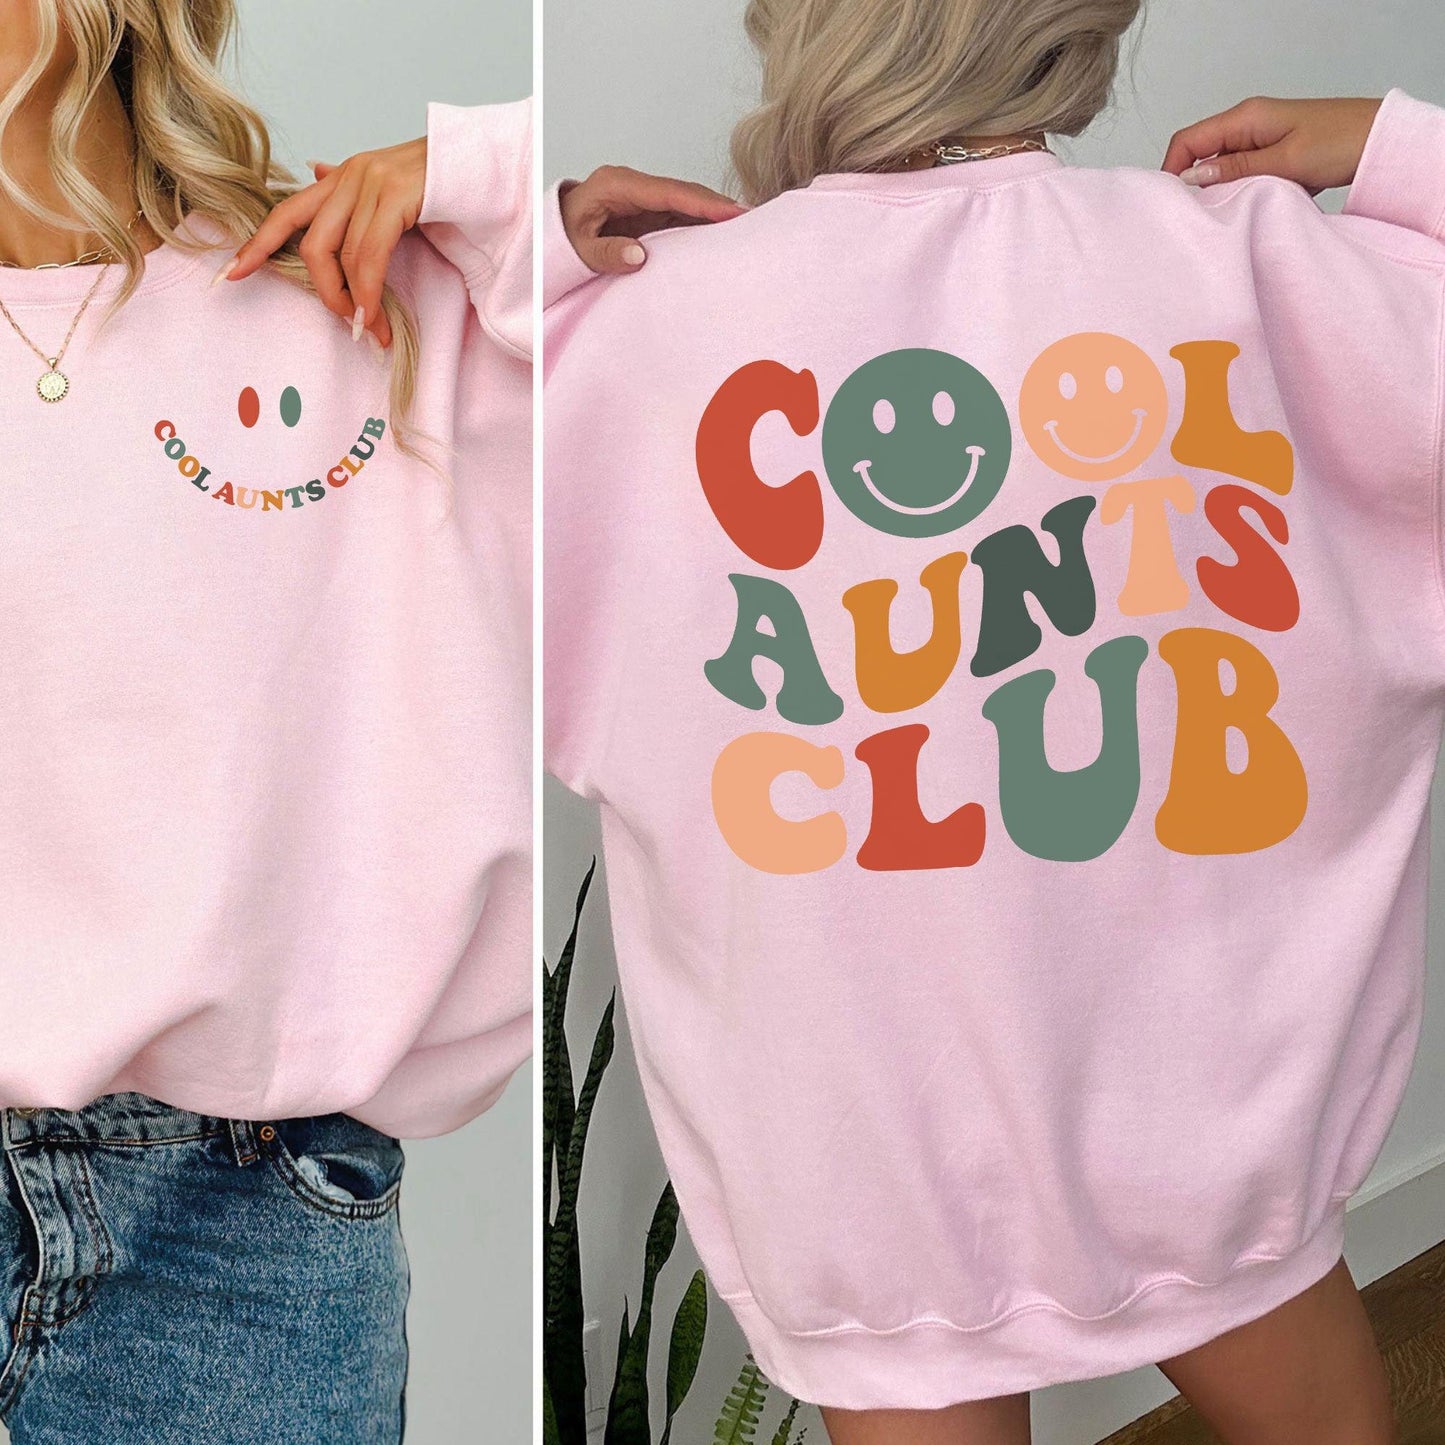 Cooles Aunts Club Sweatshirt - Cooles Tante Shirts und Hoodie - GiftHaus